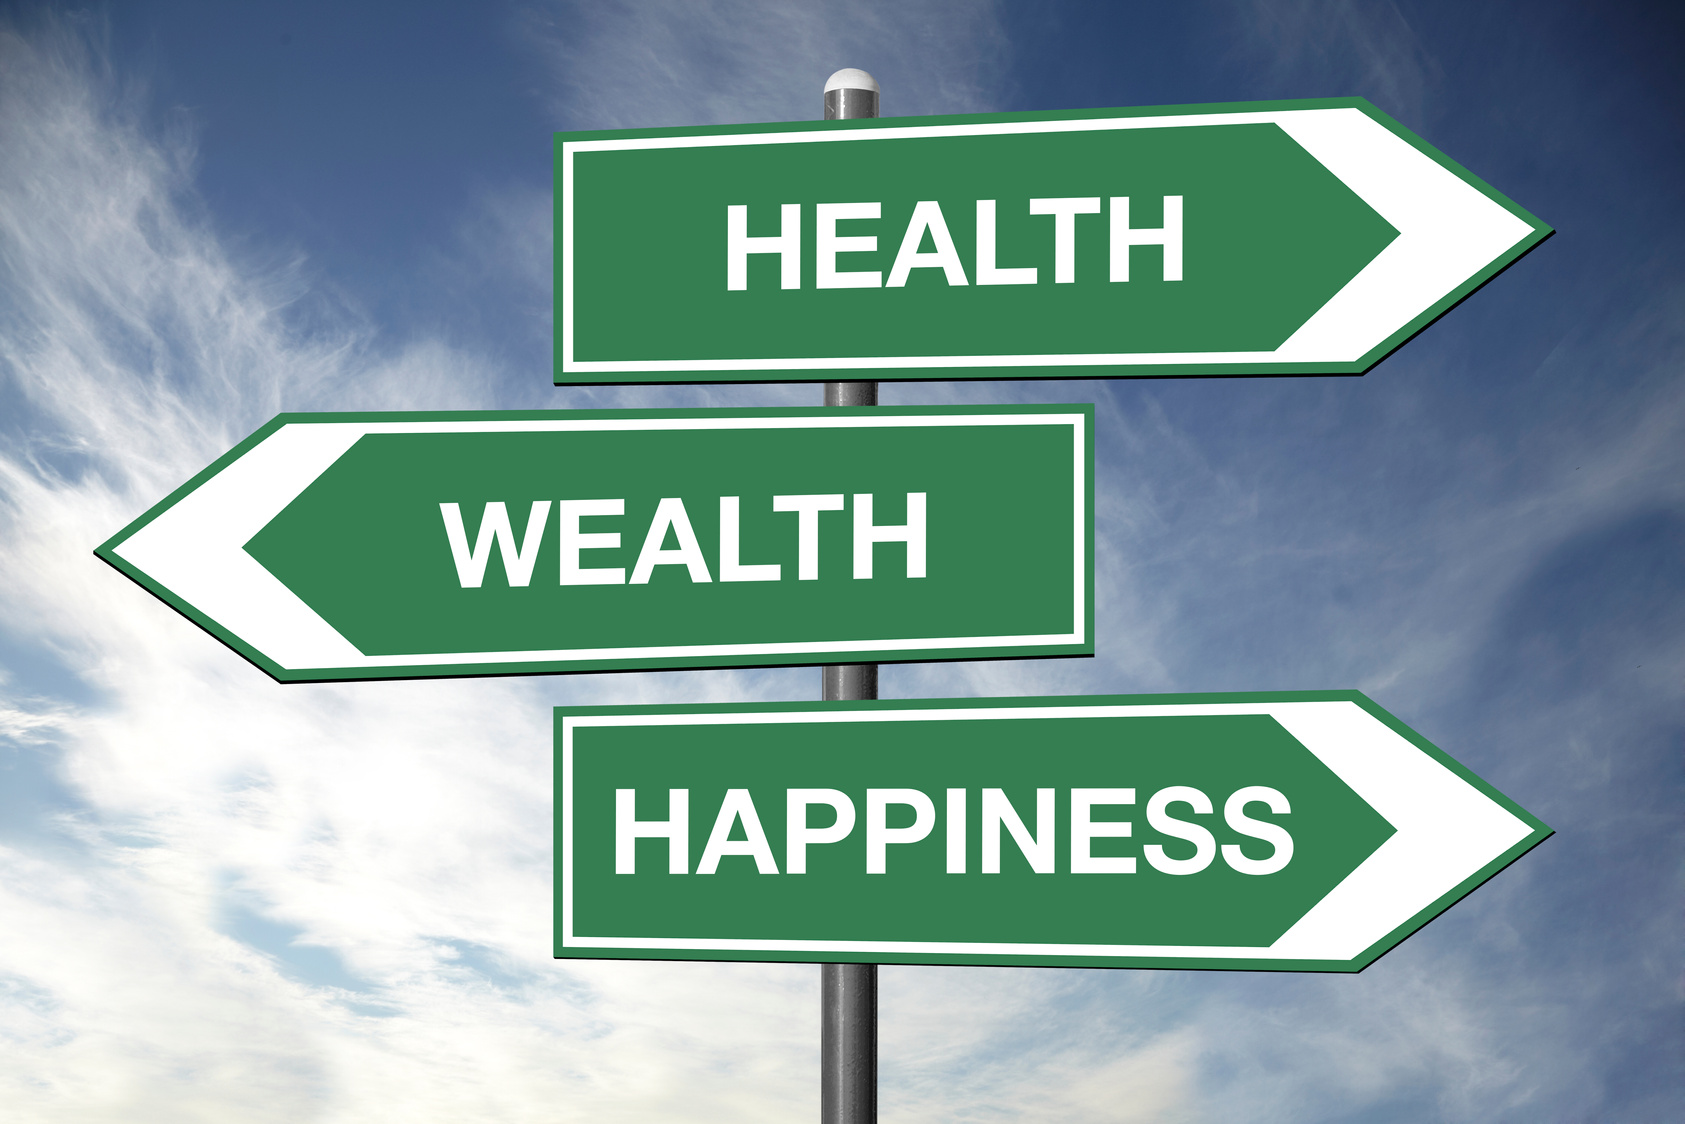 Health, wealth, happiness